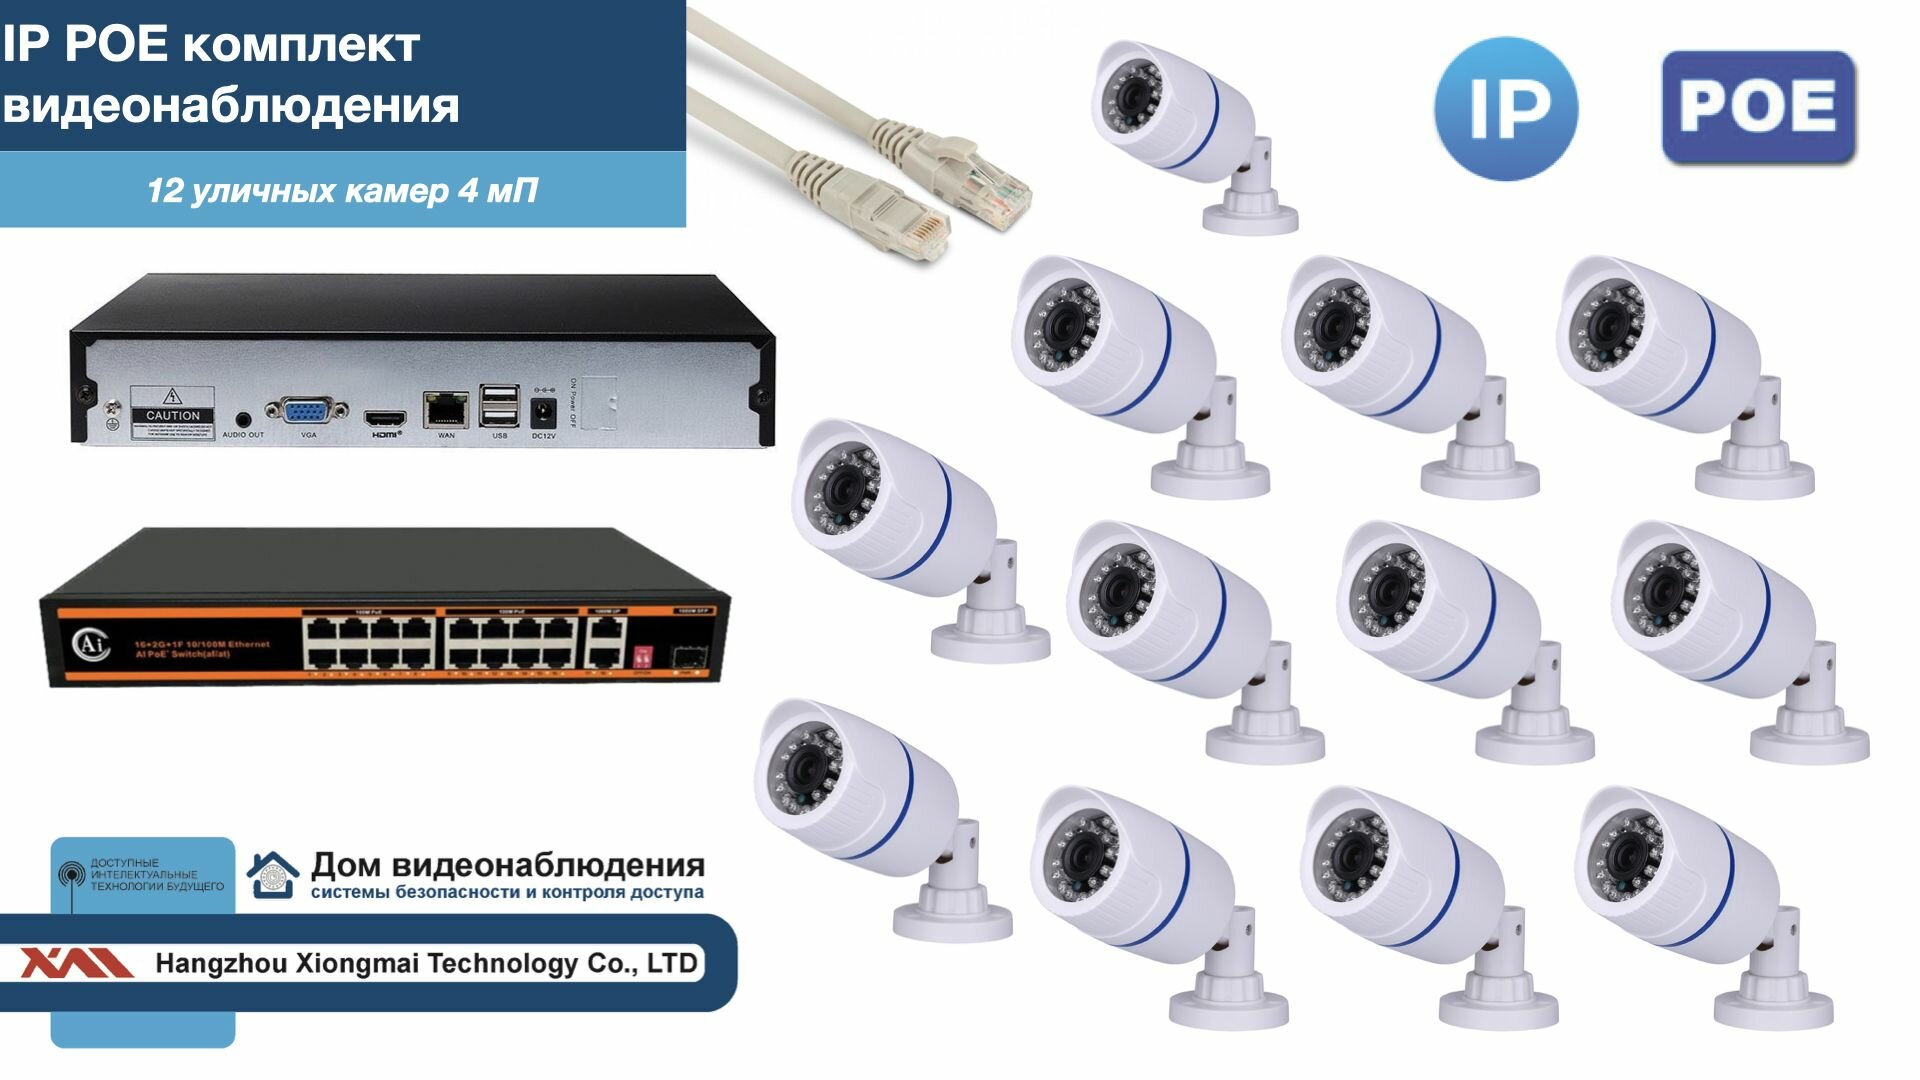 Полный IP POE комплект видеонаблюдения на 12 камер (KIT12IPPOE100W4MP)